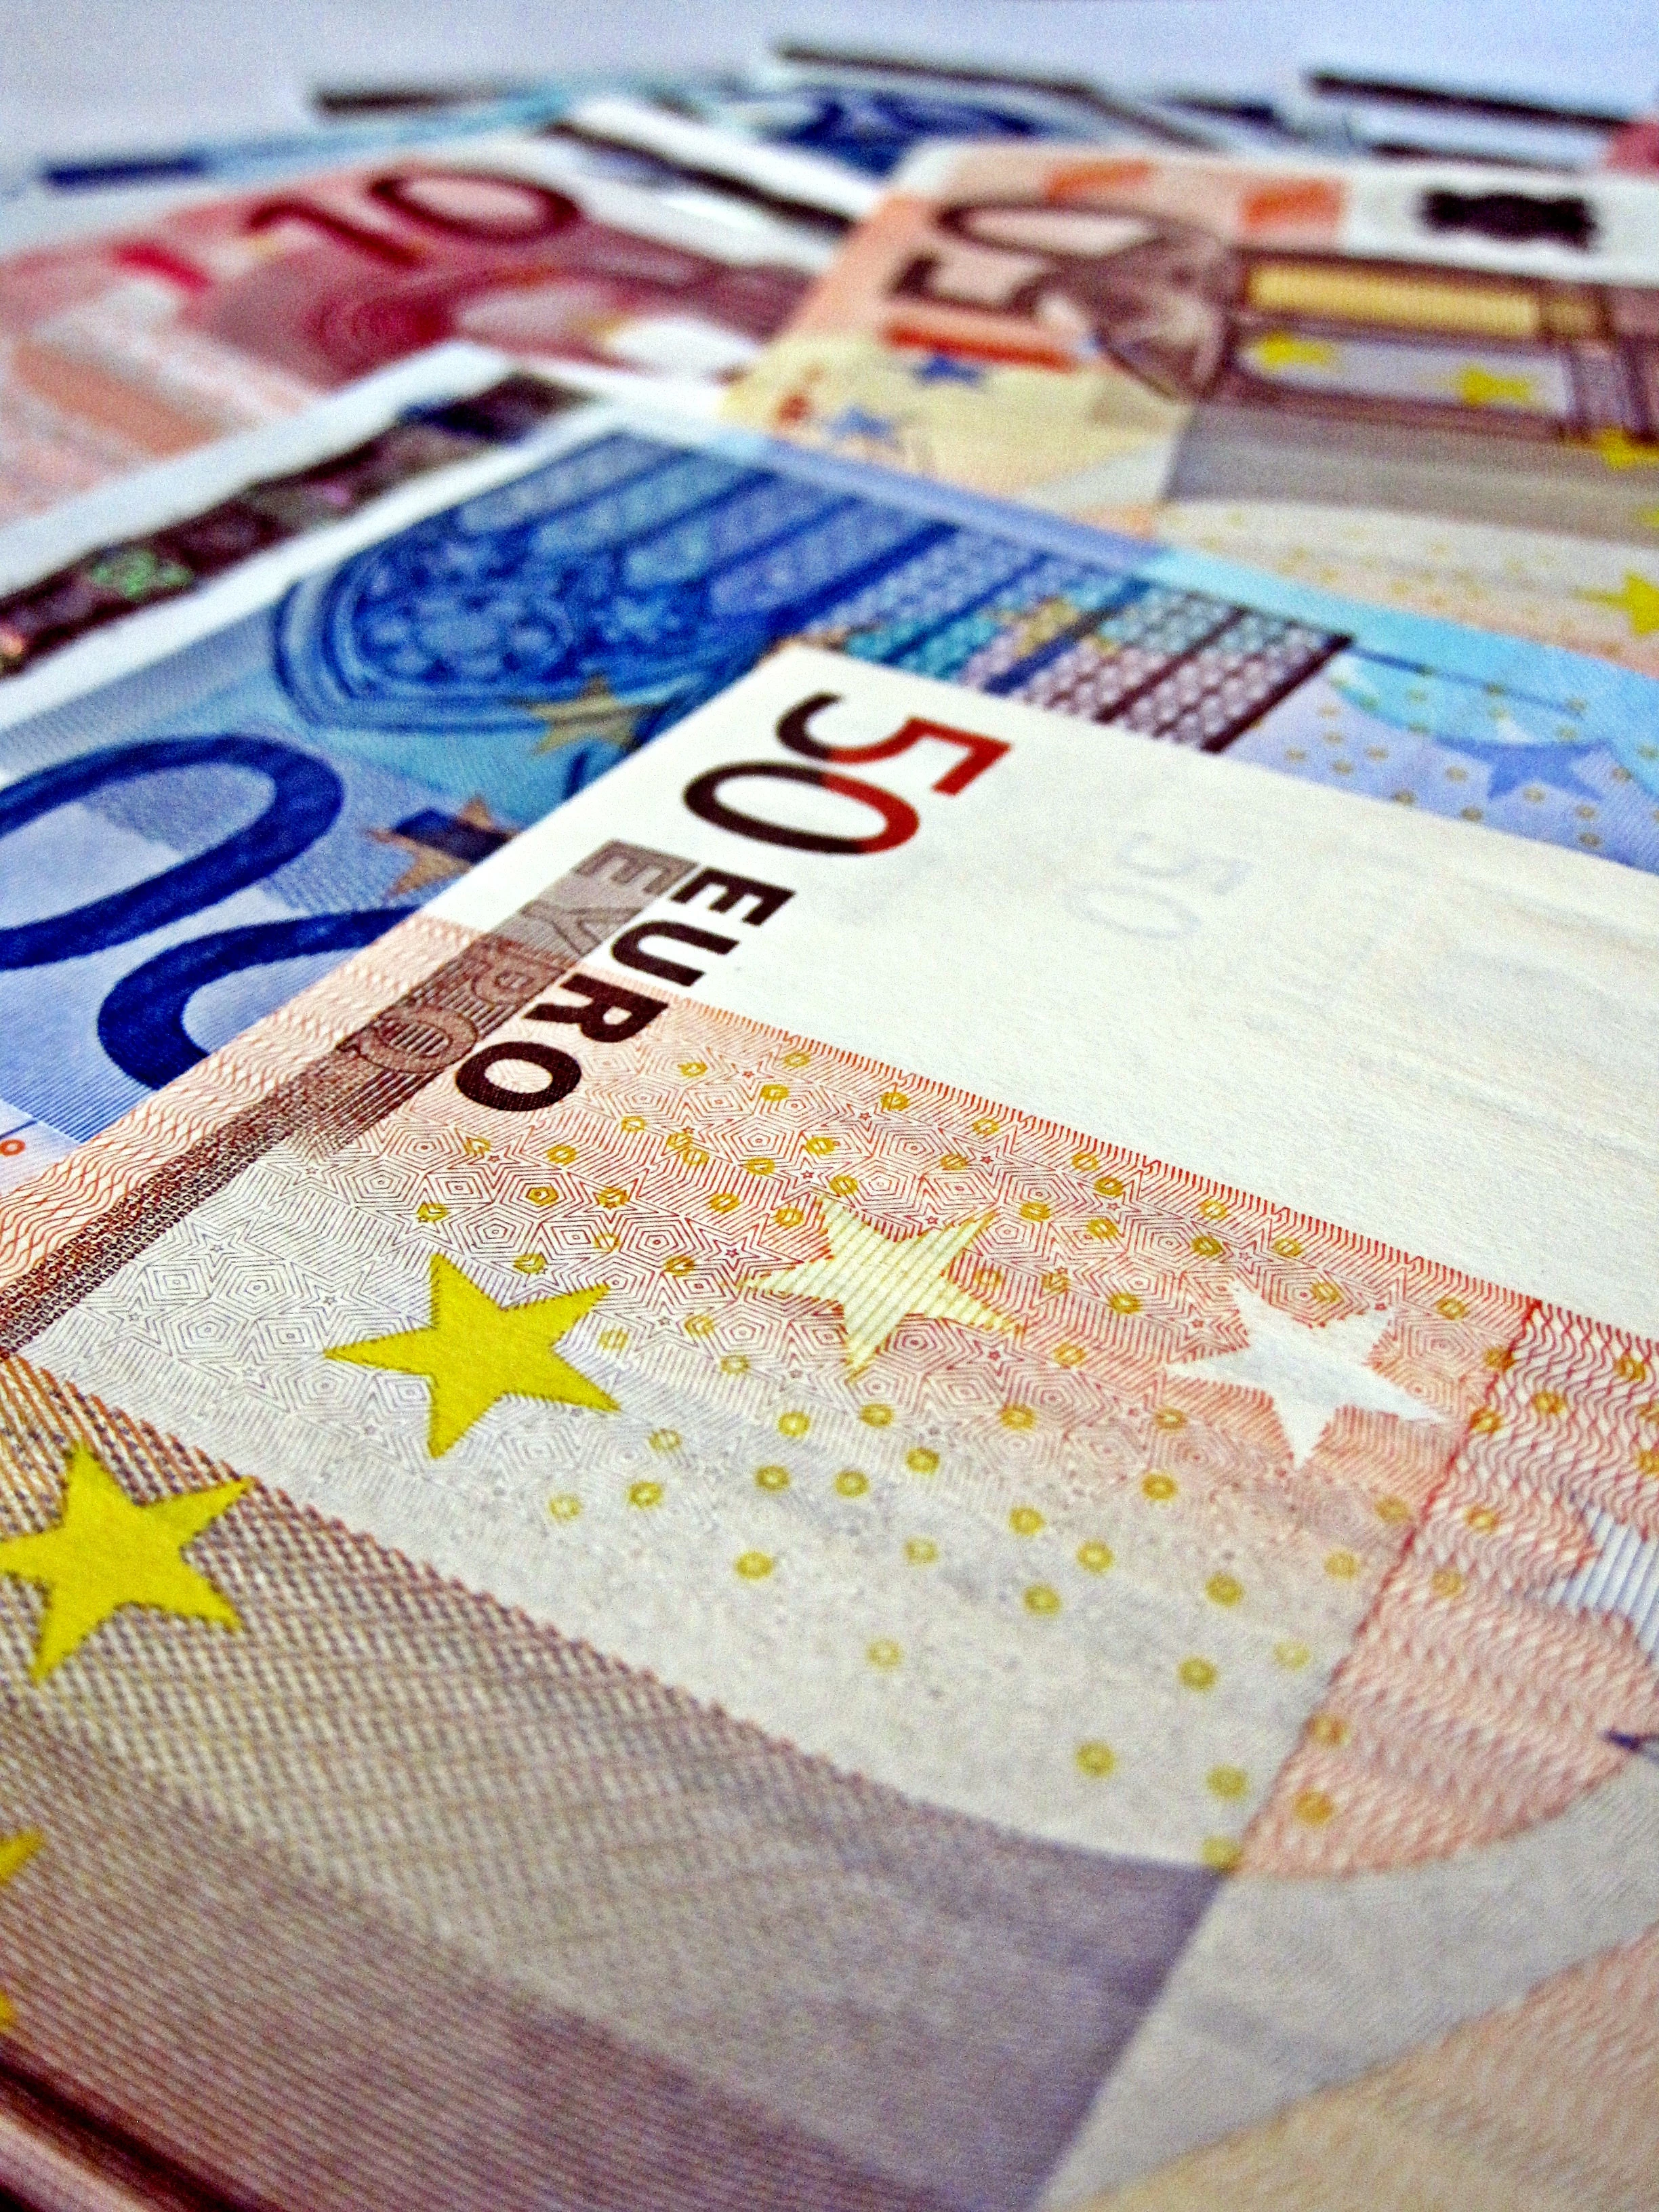 Free Image of Euro Notes